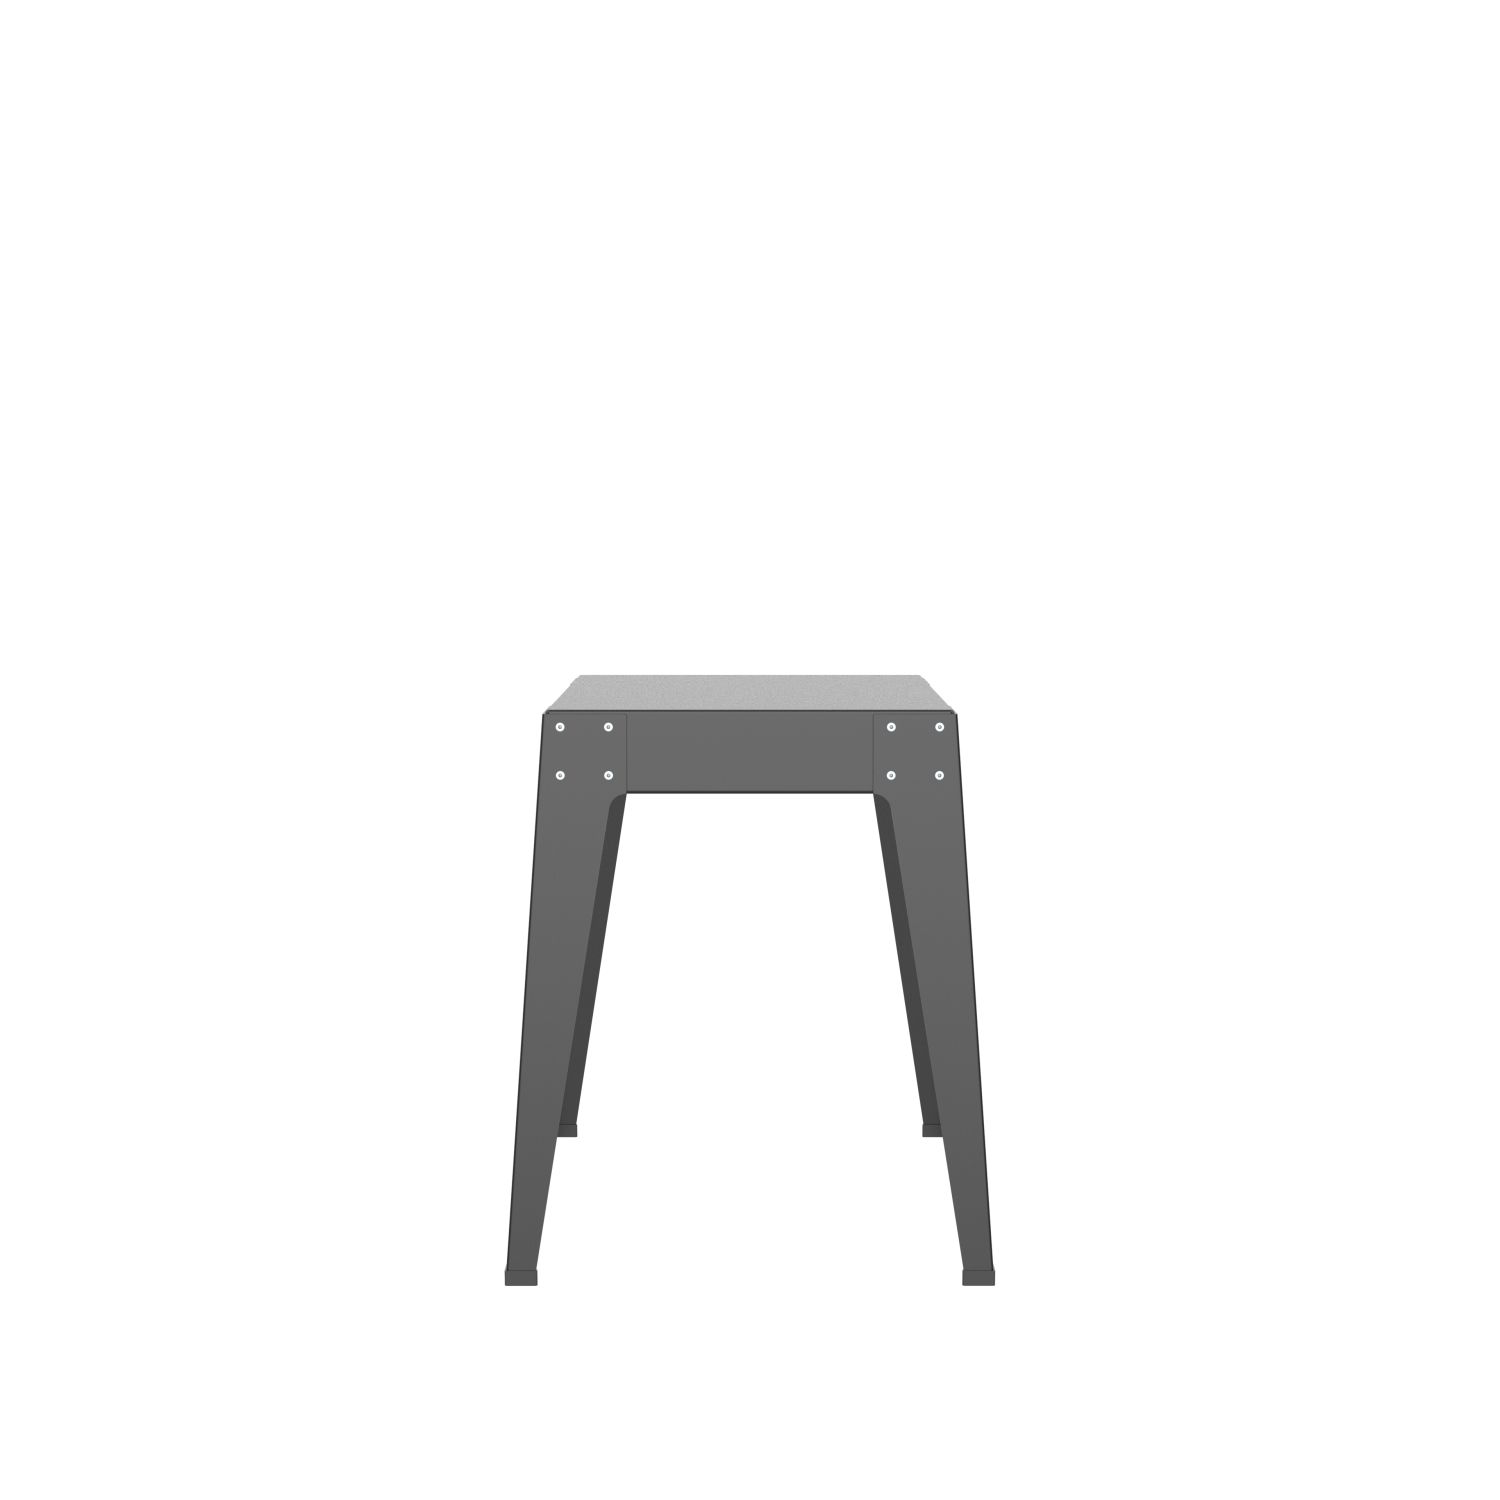 lensvelt piet hein eek aluminium series stool black ral9005 hard leg ends